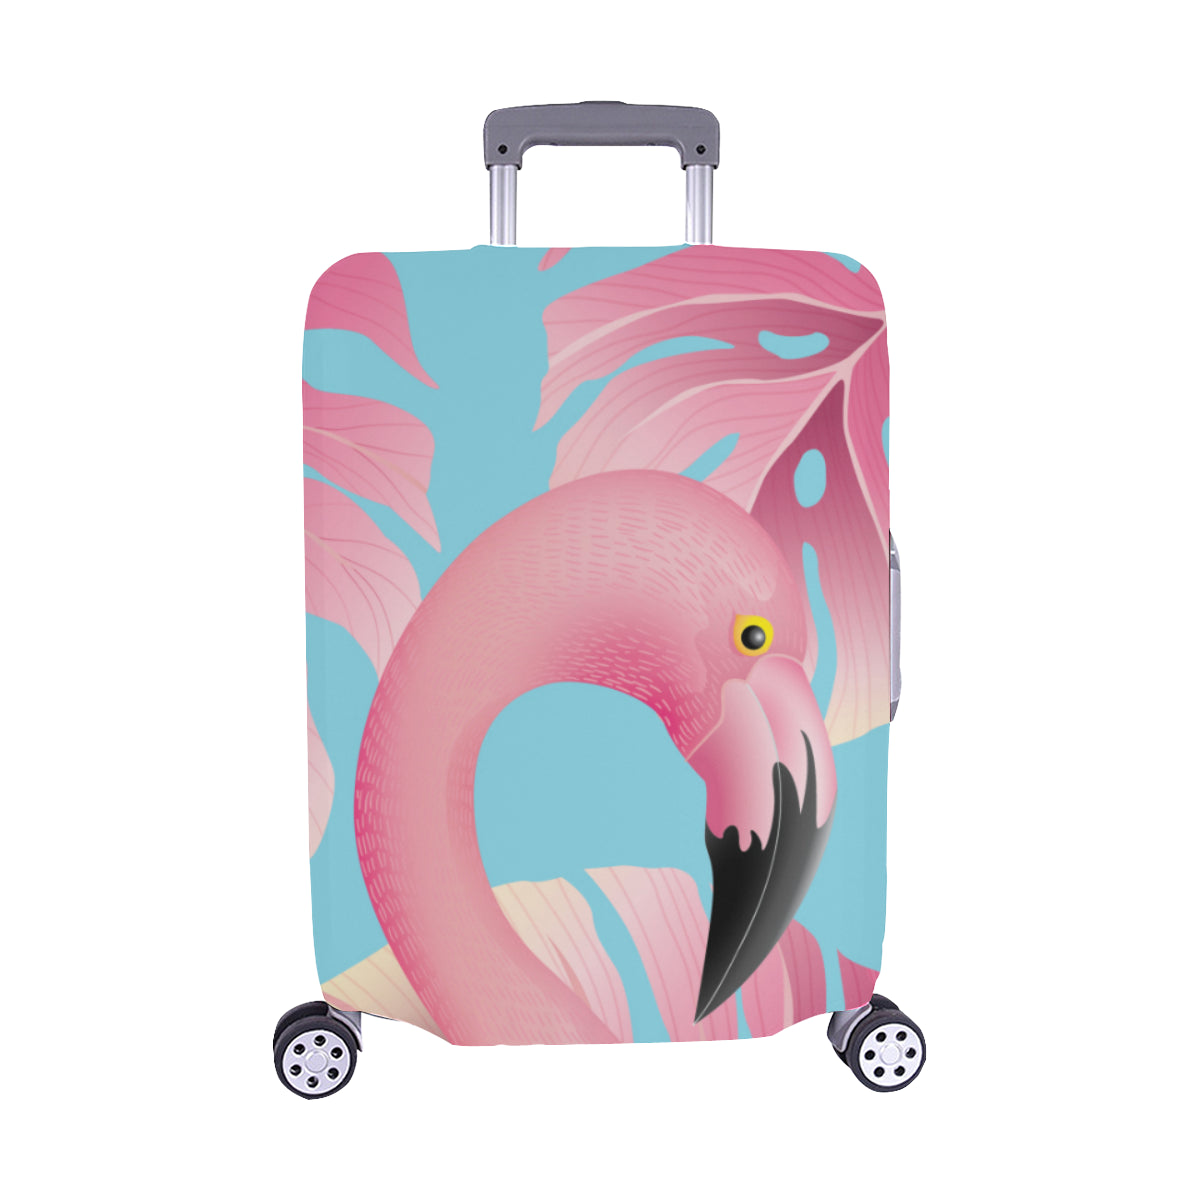 Flamingo Luggage Covers - The Flamingo Shop